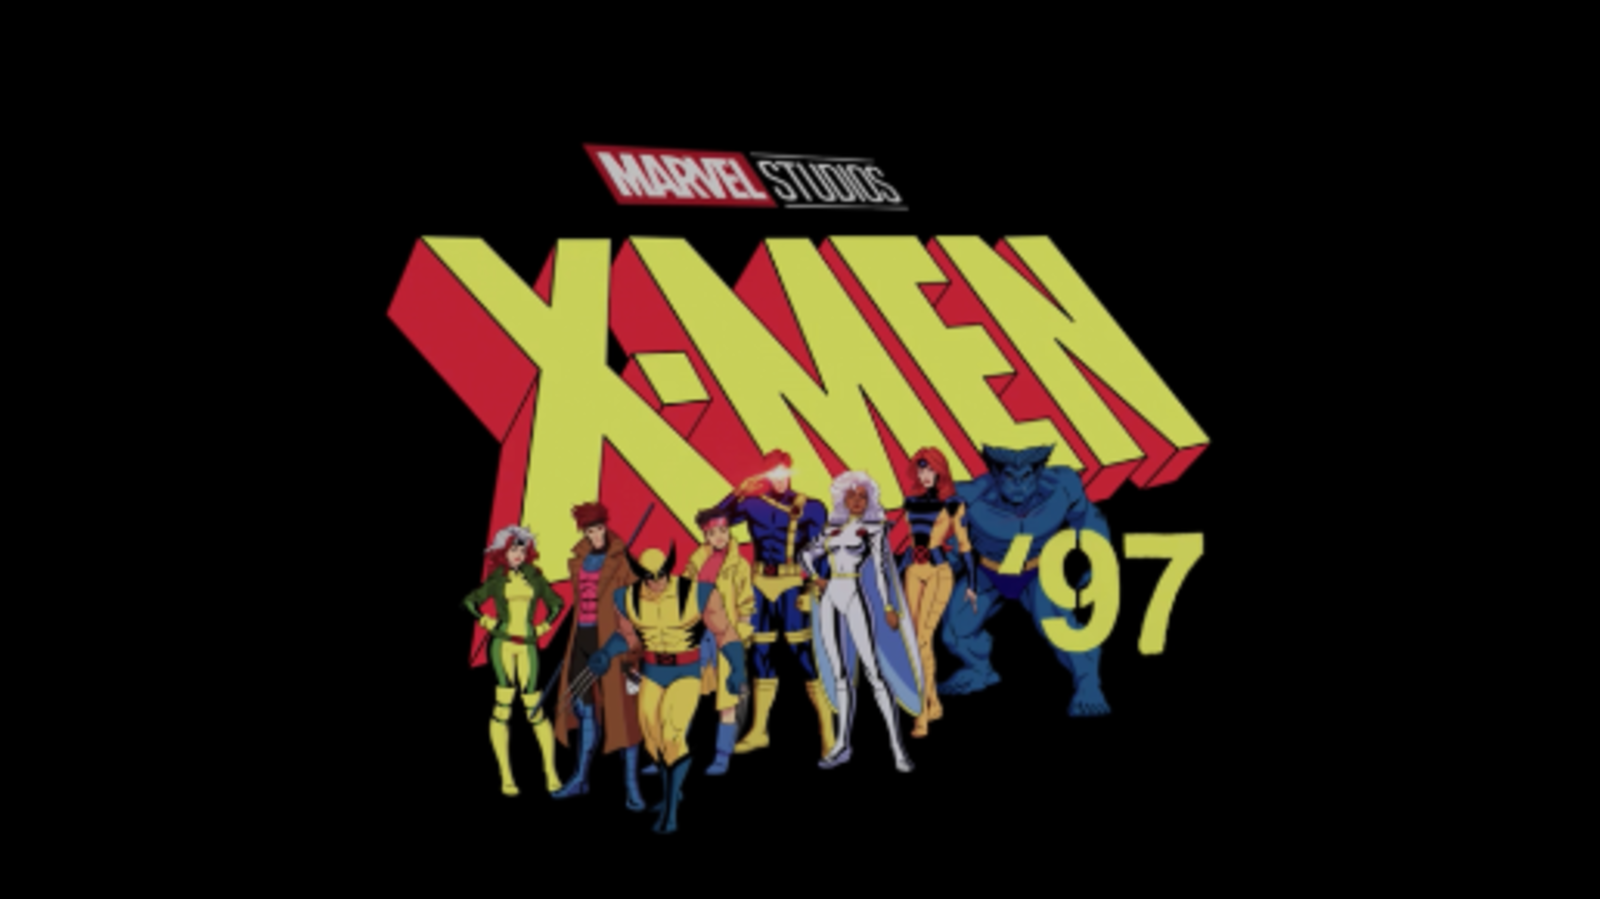 X-Men: New Mutants' cast details out - Malayalam News 